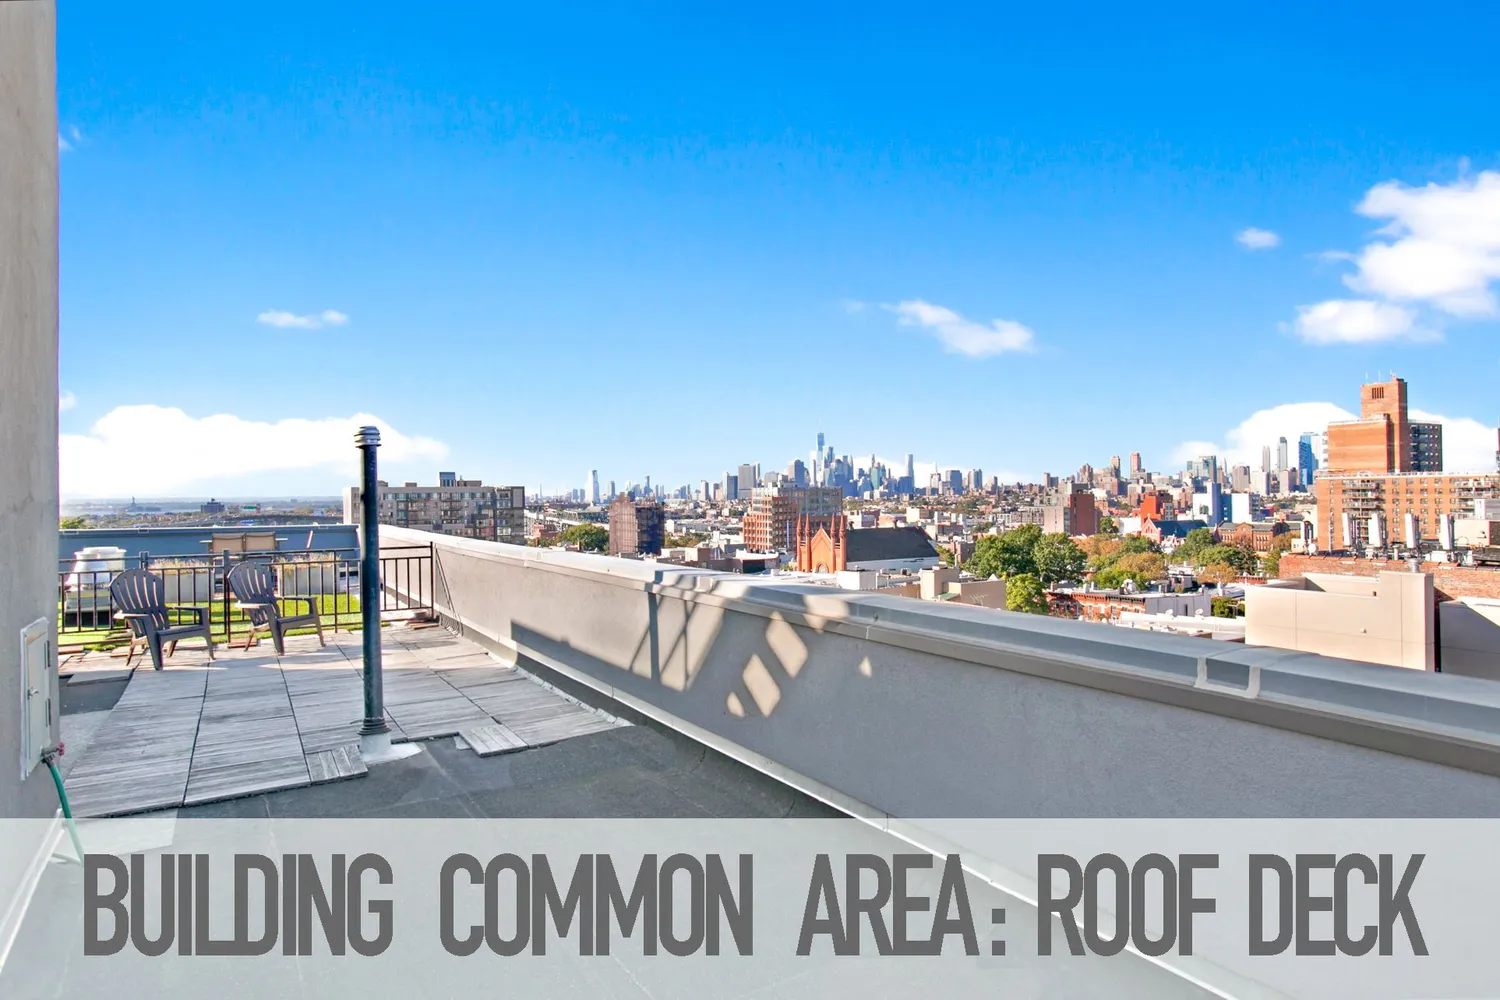 Common Roof Deck